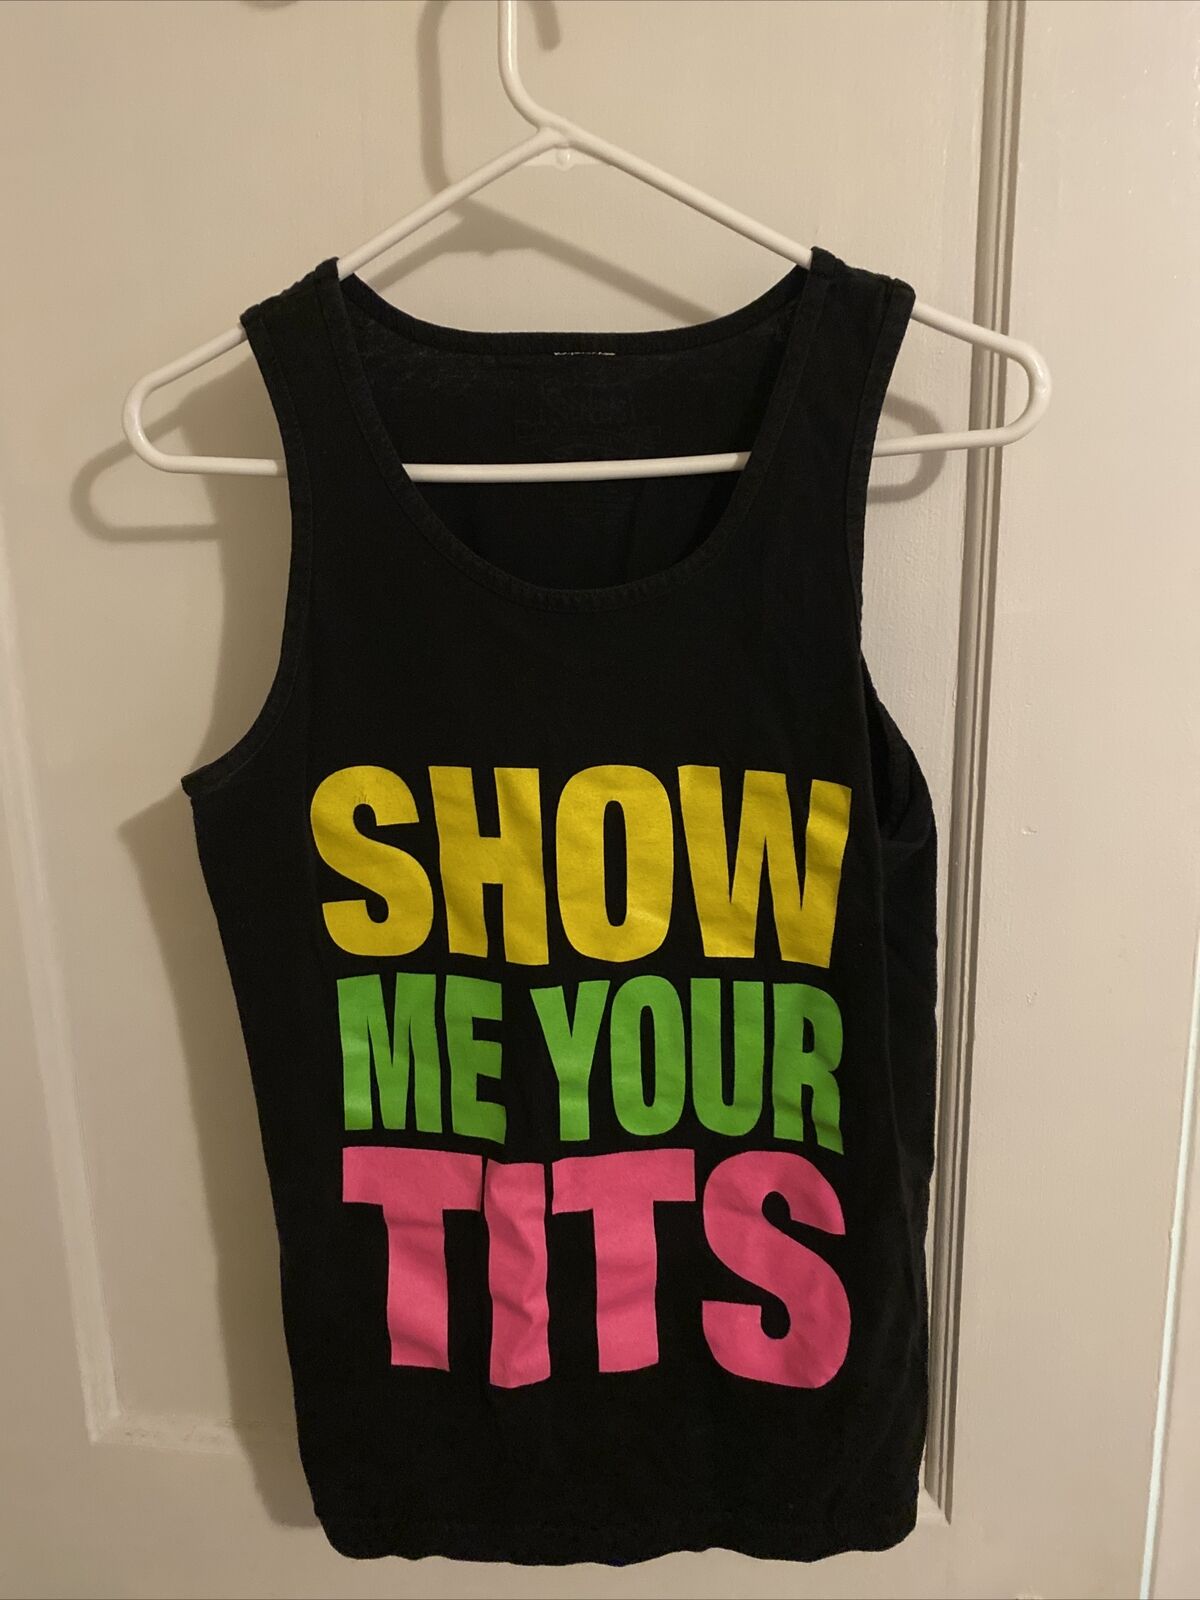 calvin kurniawan recommends show me your tits shirt pic